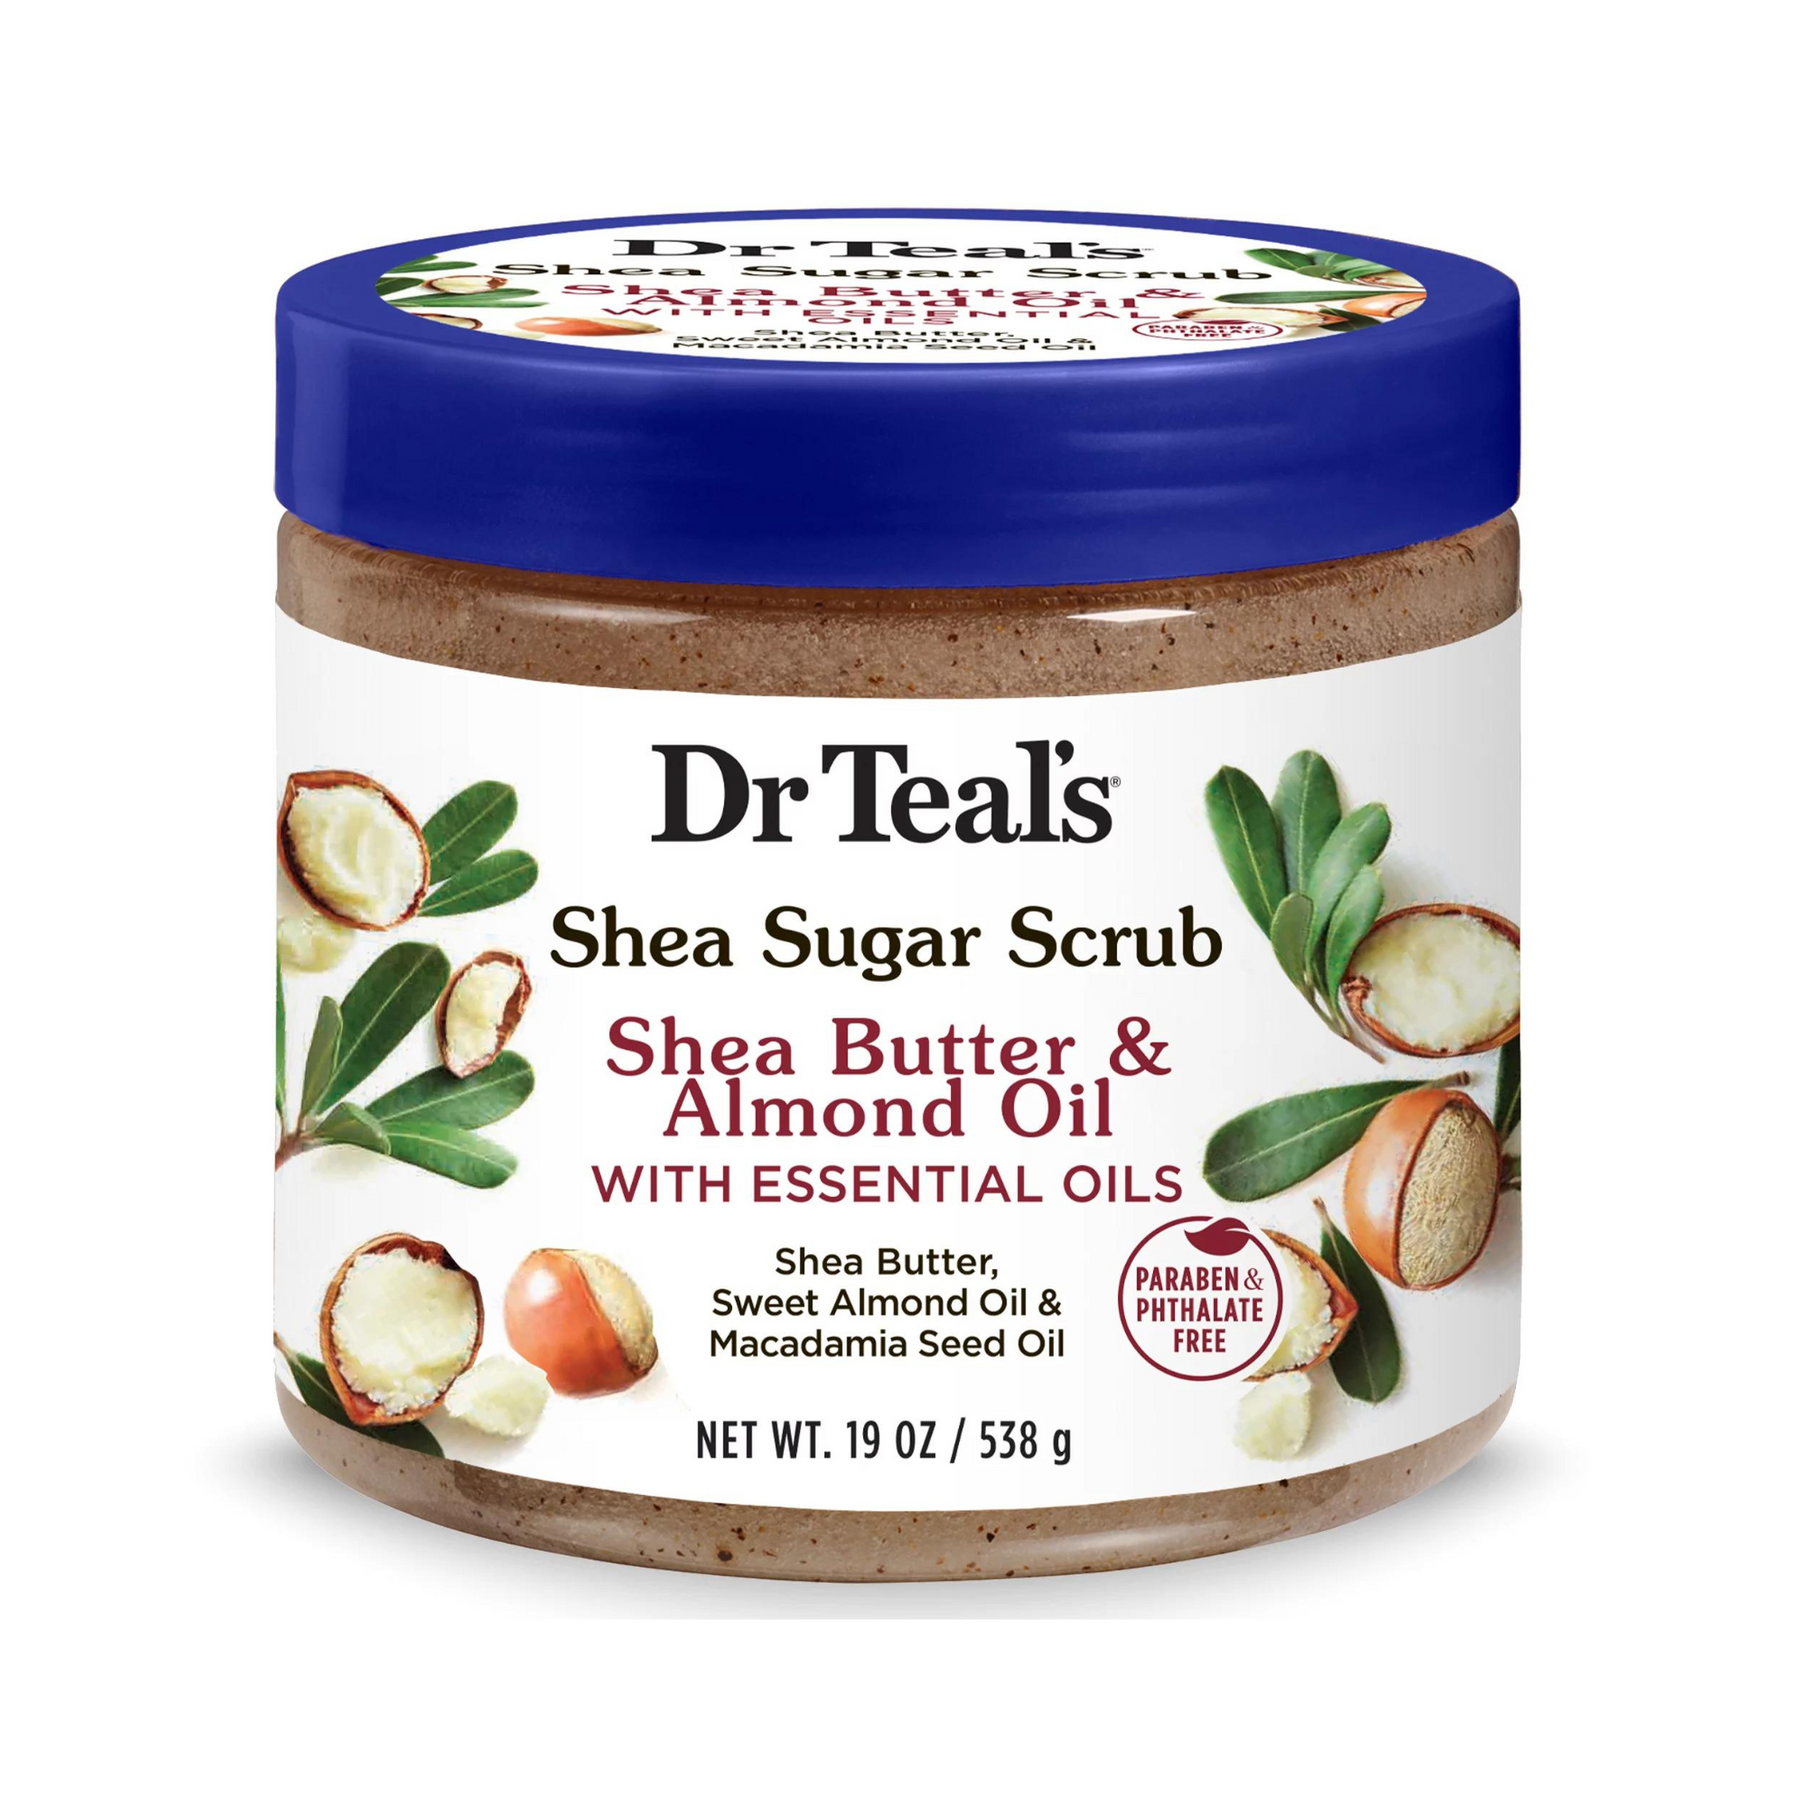 Shea Sugar Scrub with Shea Butter & Almond Oil